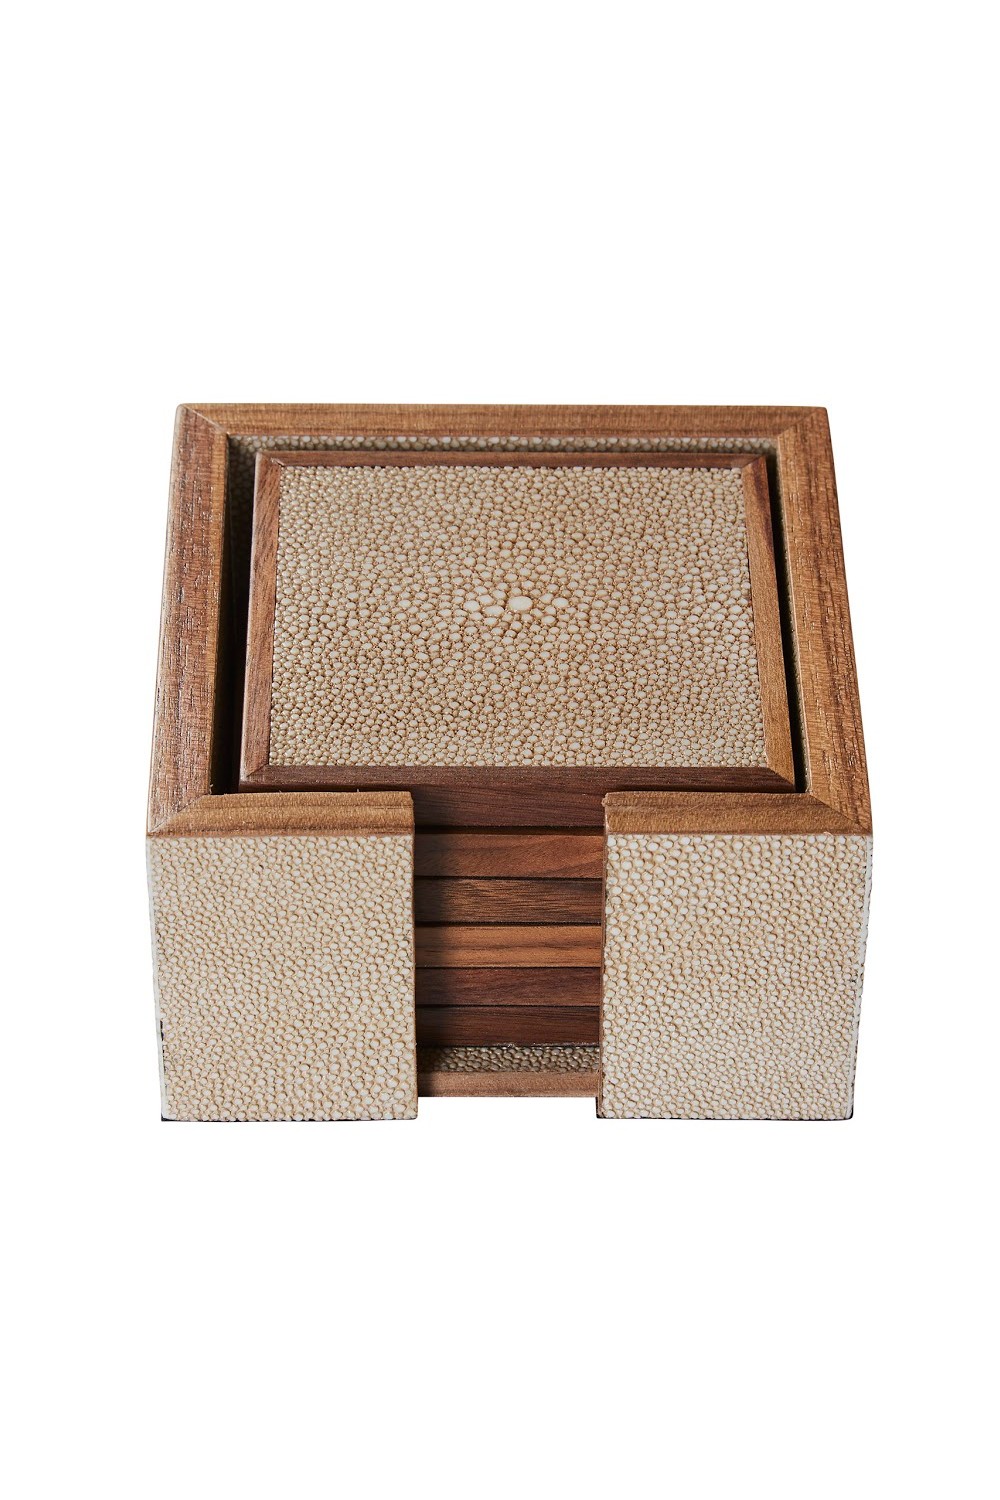 Cream Shagreen Coasters with Box (6) | Andrew Martin Lexi | OROA